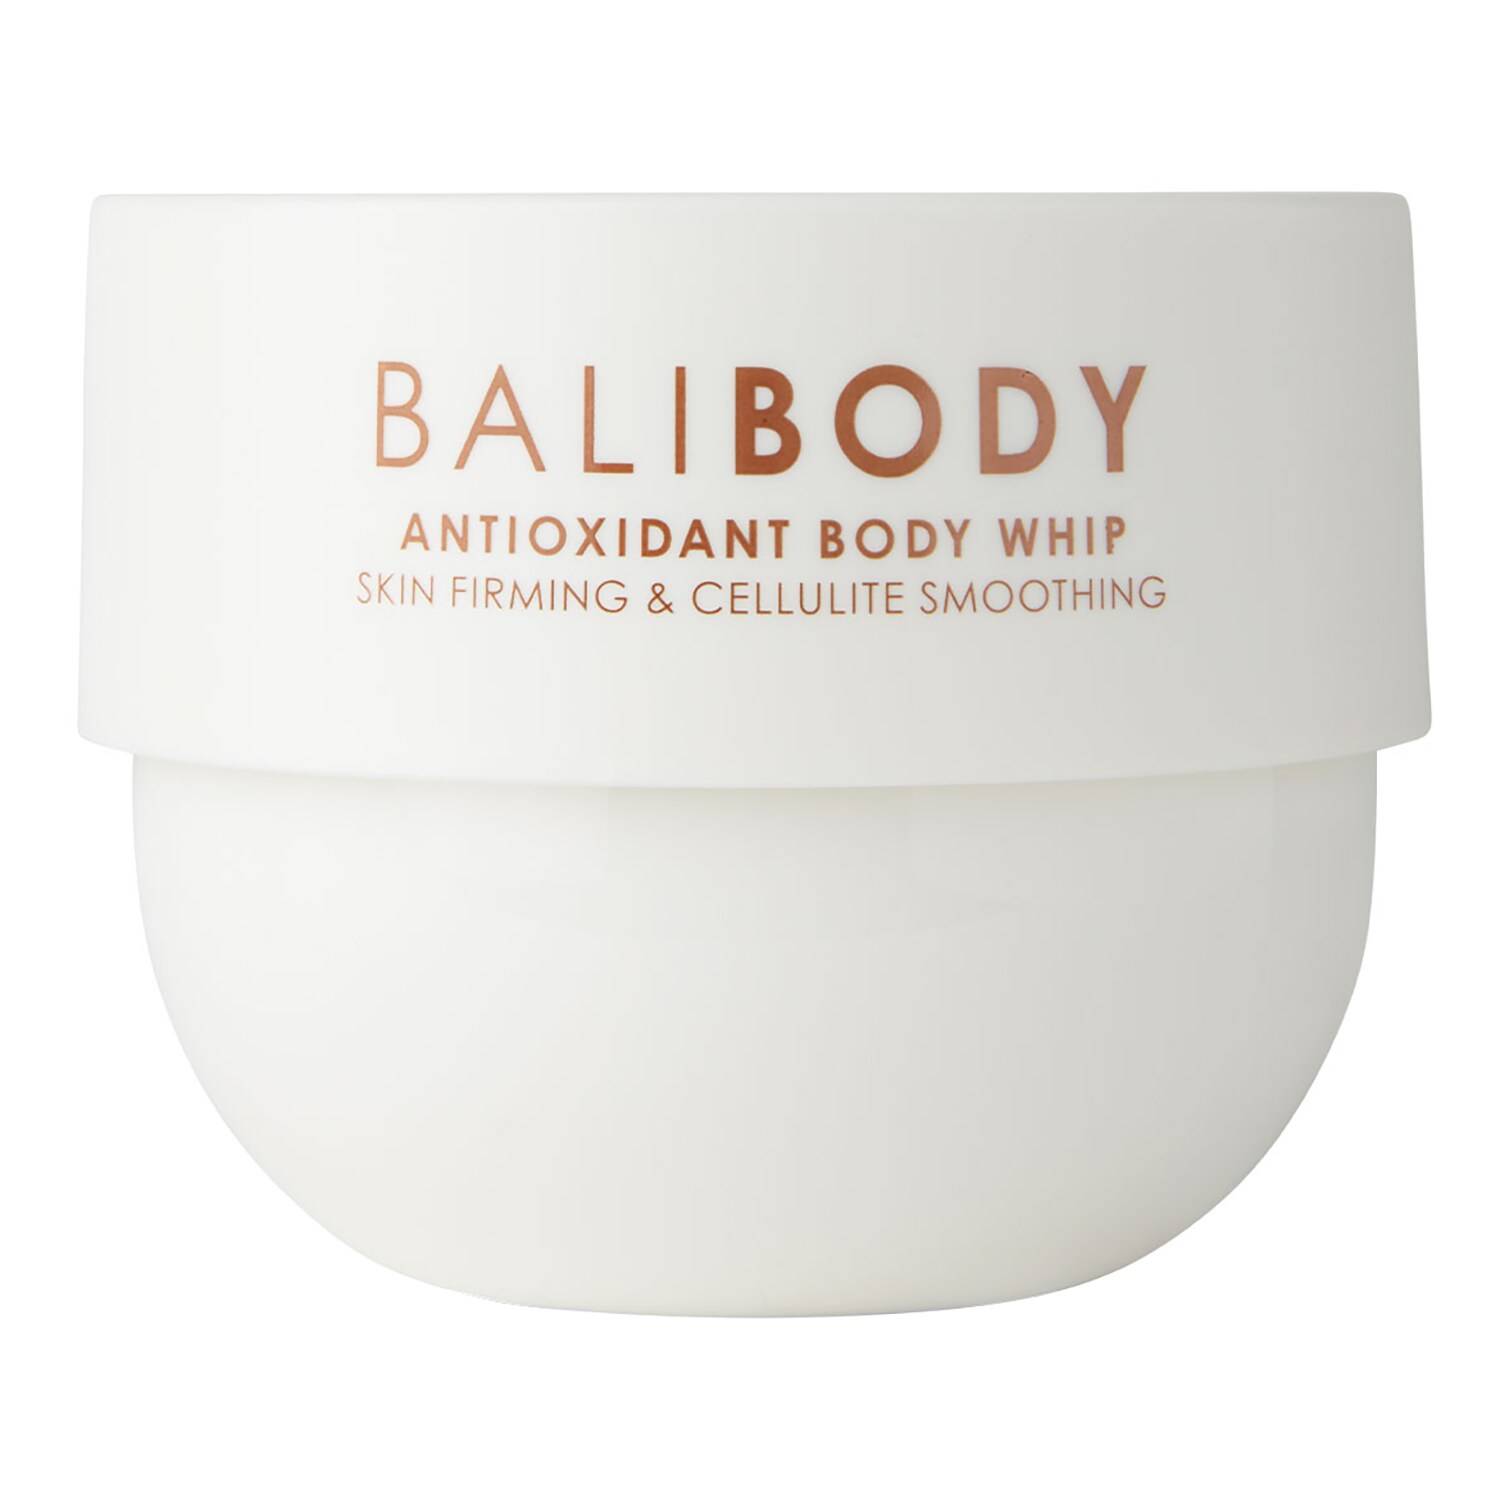 Bali Body Antioxidant Body Whip 225G